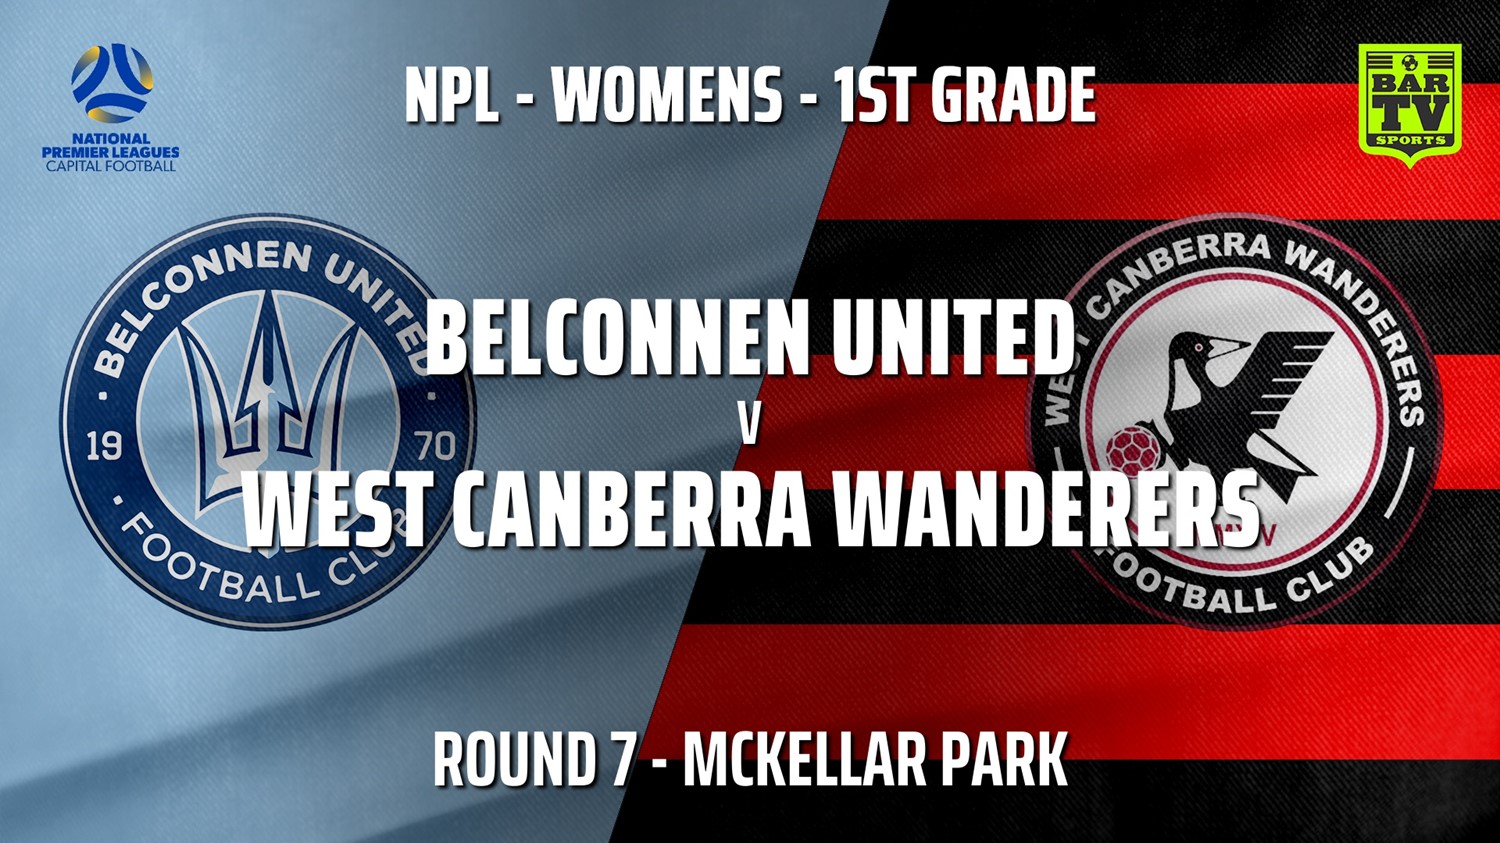 210522-NPLW - Capital Round 7 - Belconnen United (women) v West Canberra Wanderers FC (women) Slate Image